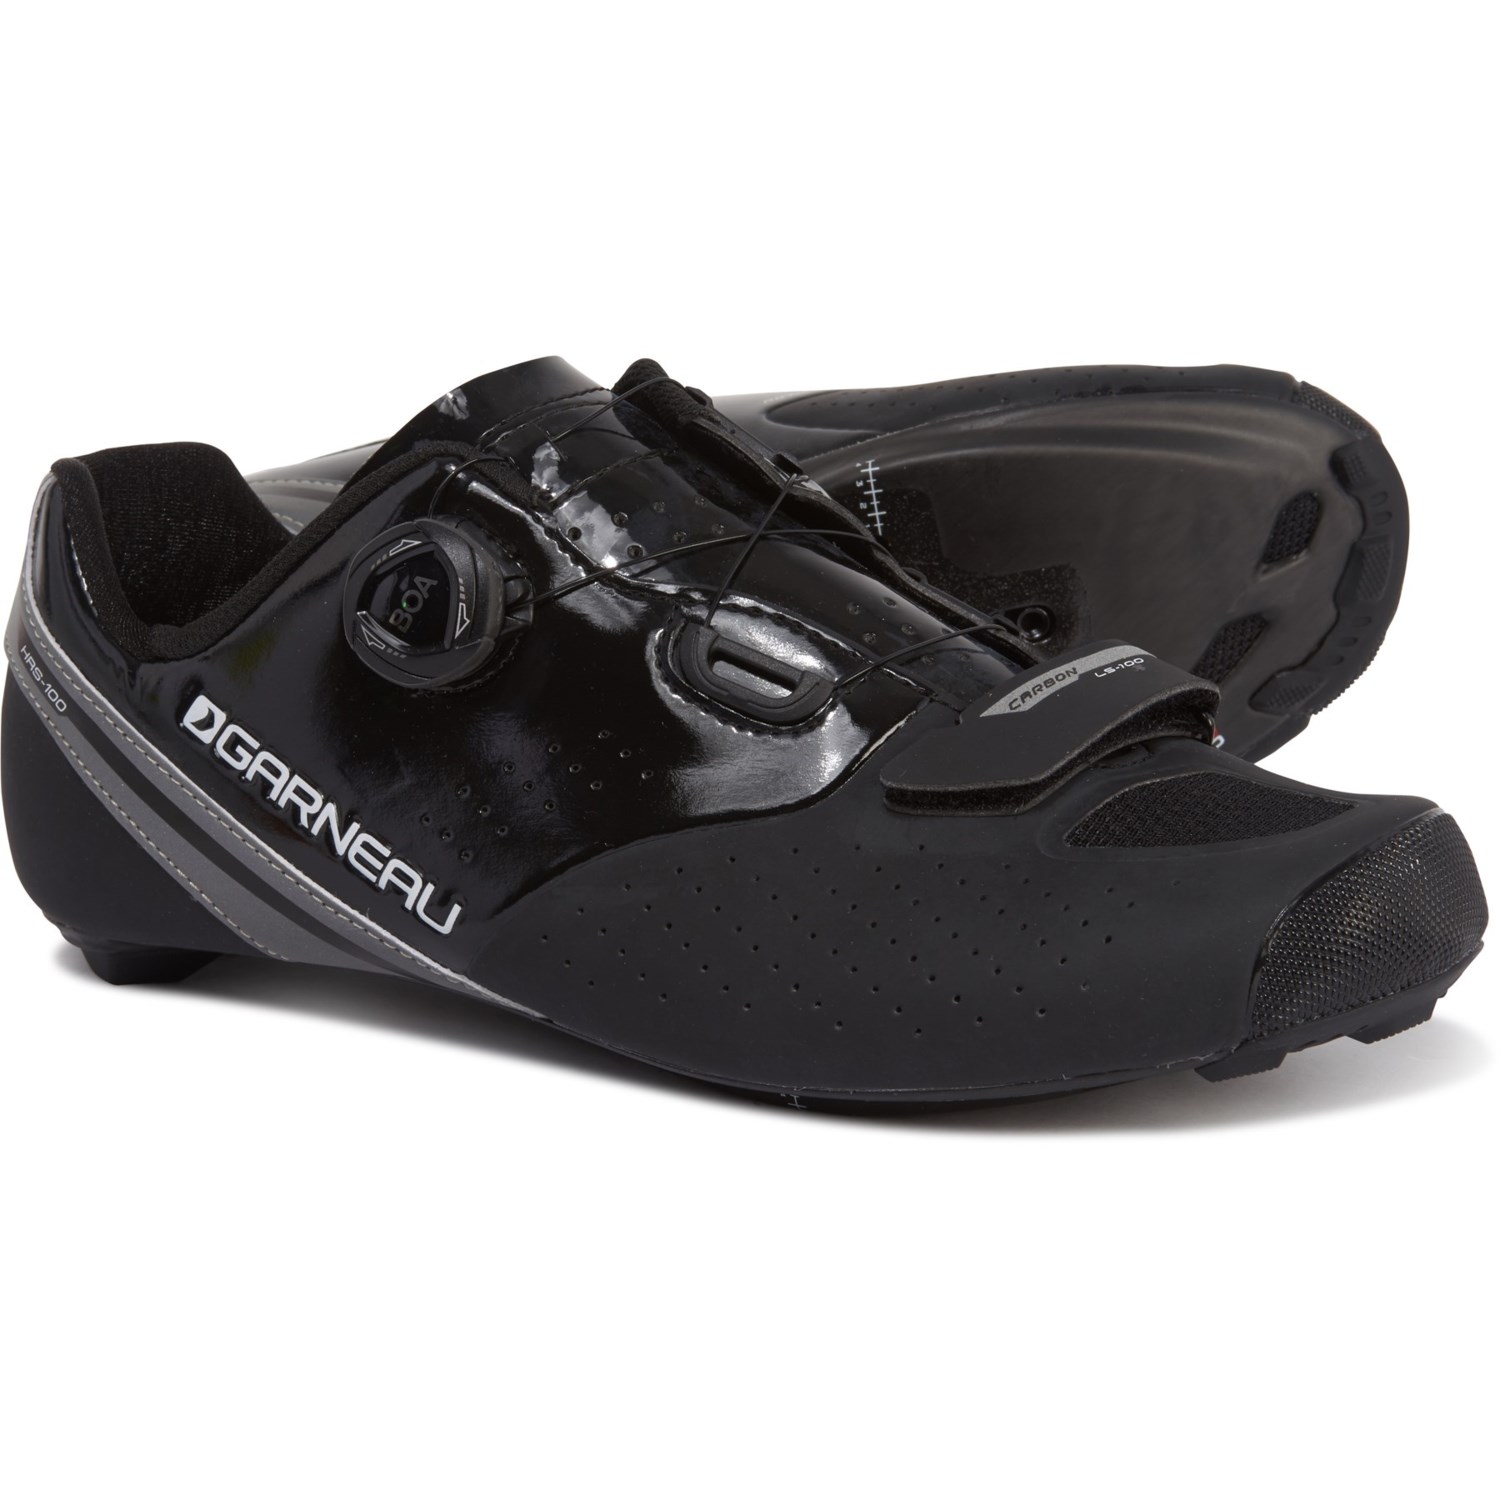 Louis Garneau Carbon LS-100 II Cycling Shoes (For Men) - Save 40%